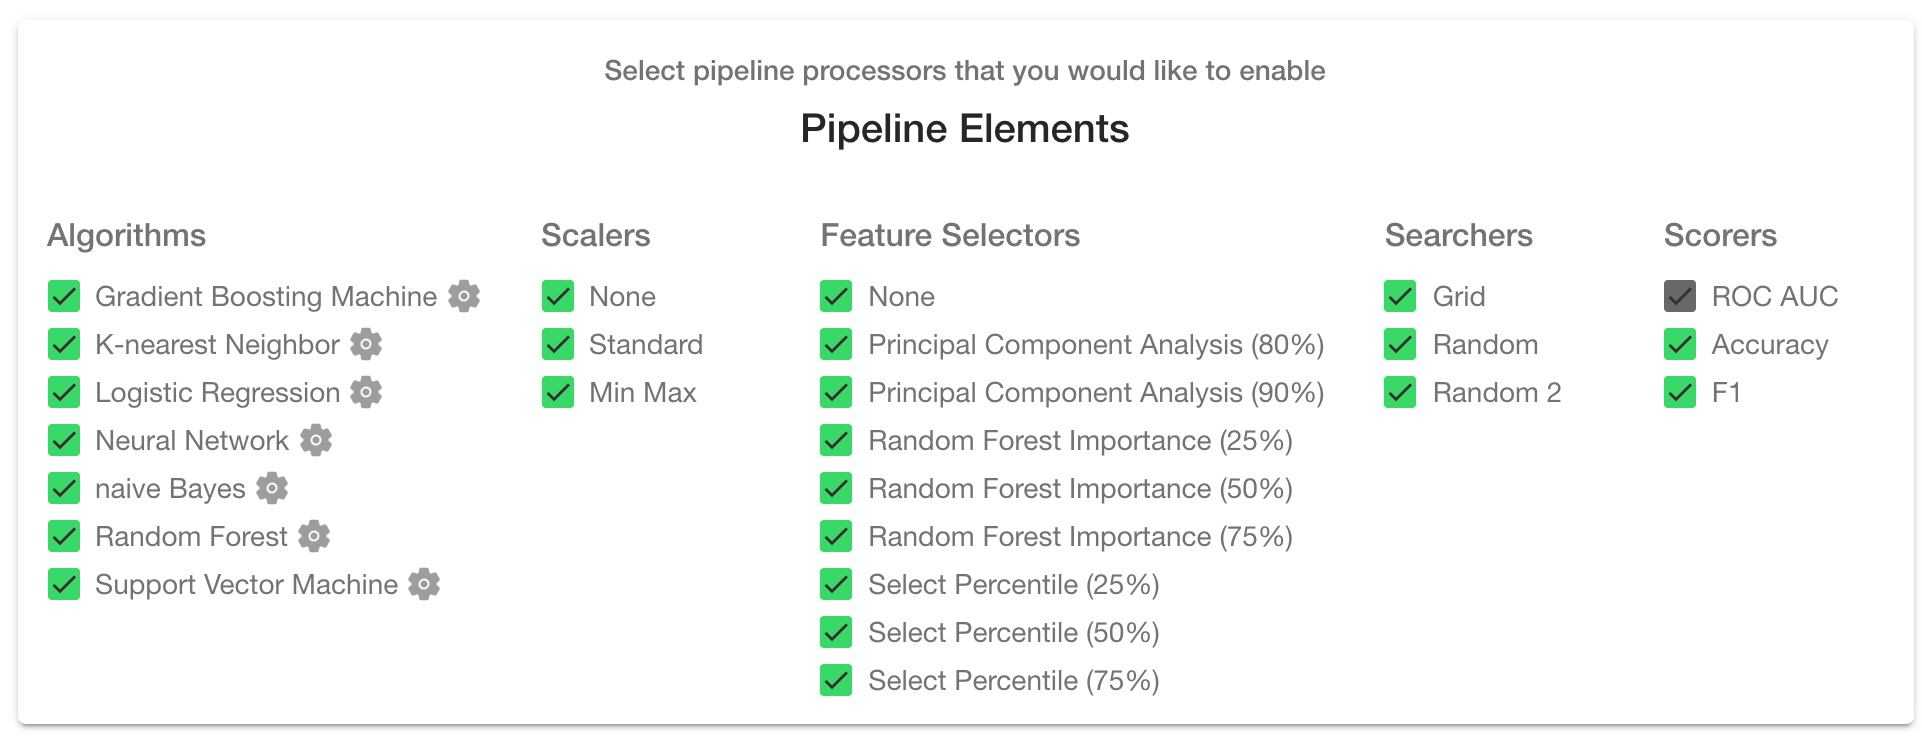 Pipeline Elements